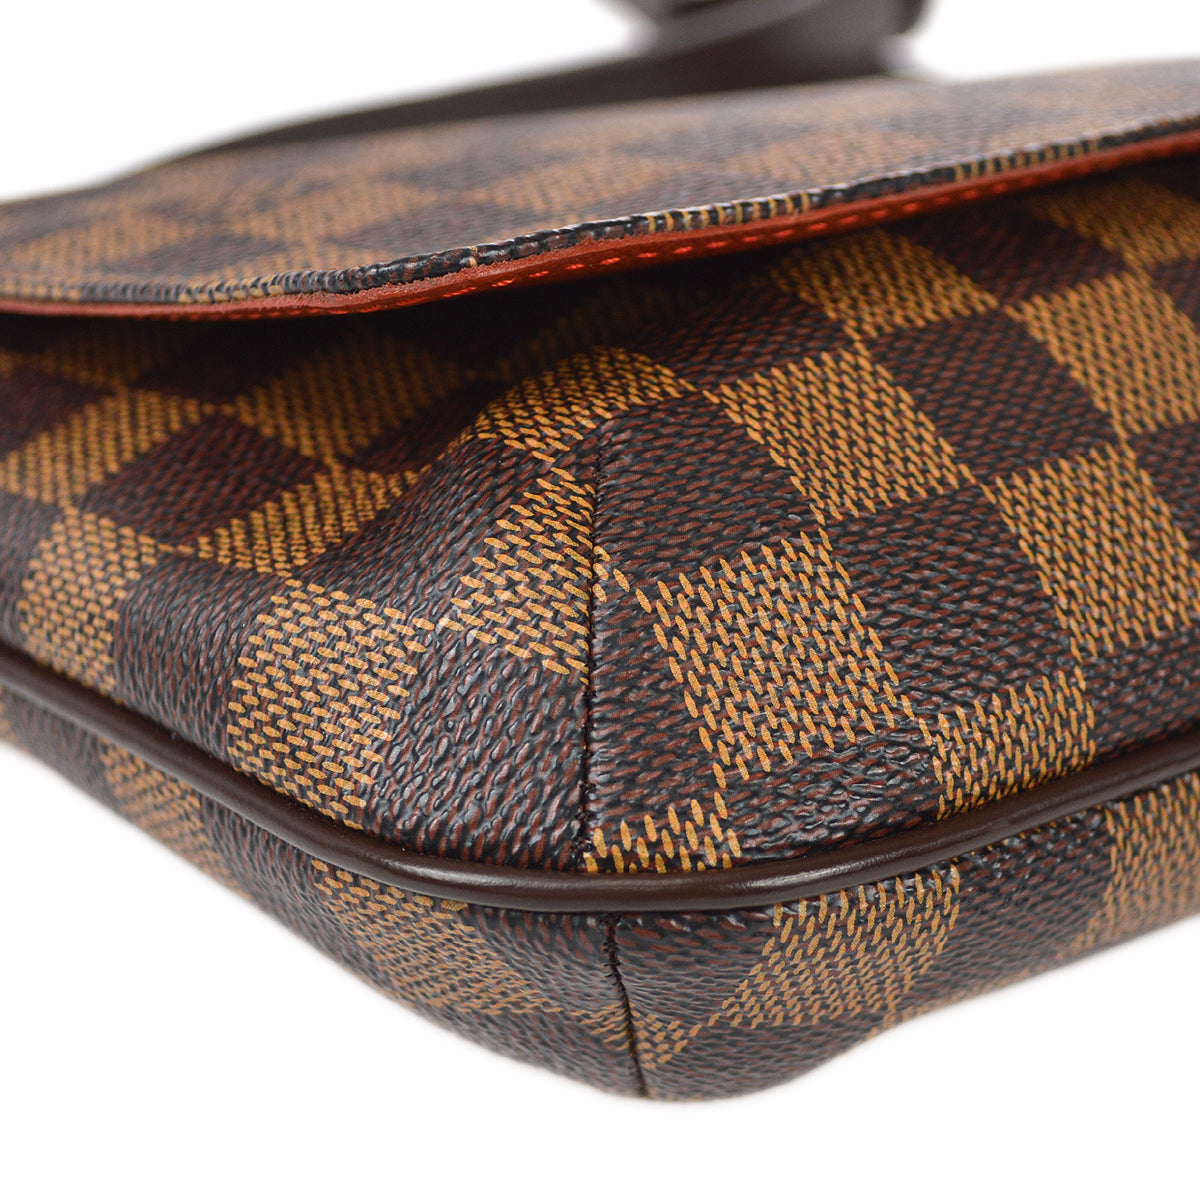 Louis Vuitton LOUIS VUITTON Damier Musette Tango Long Shoulder Bag Ebene  N51301